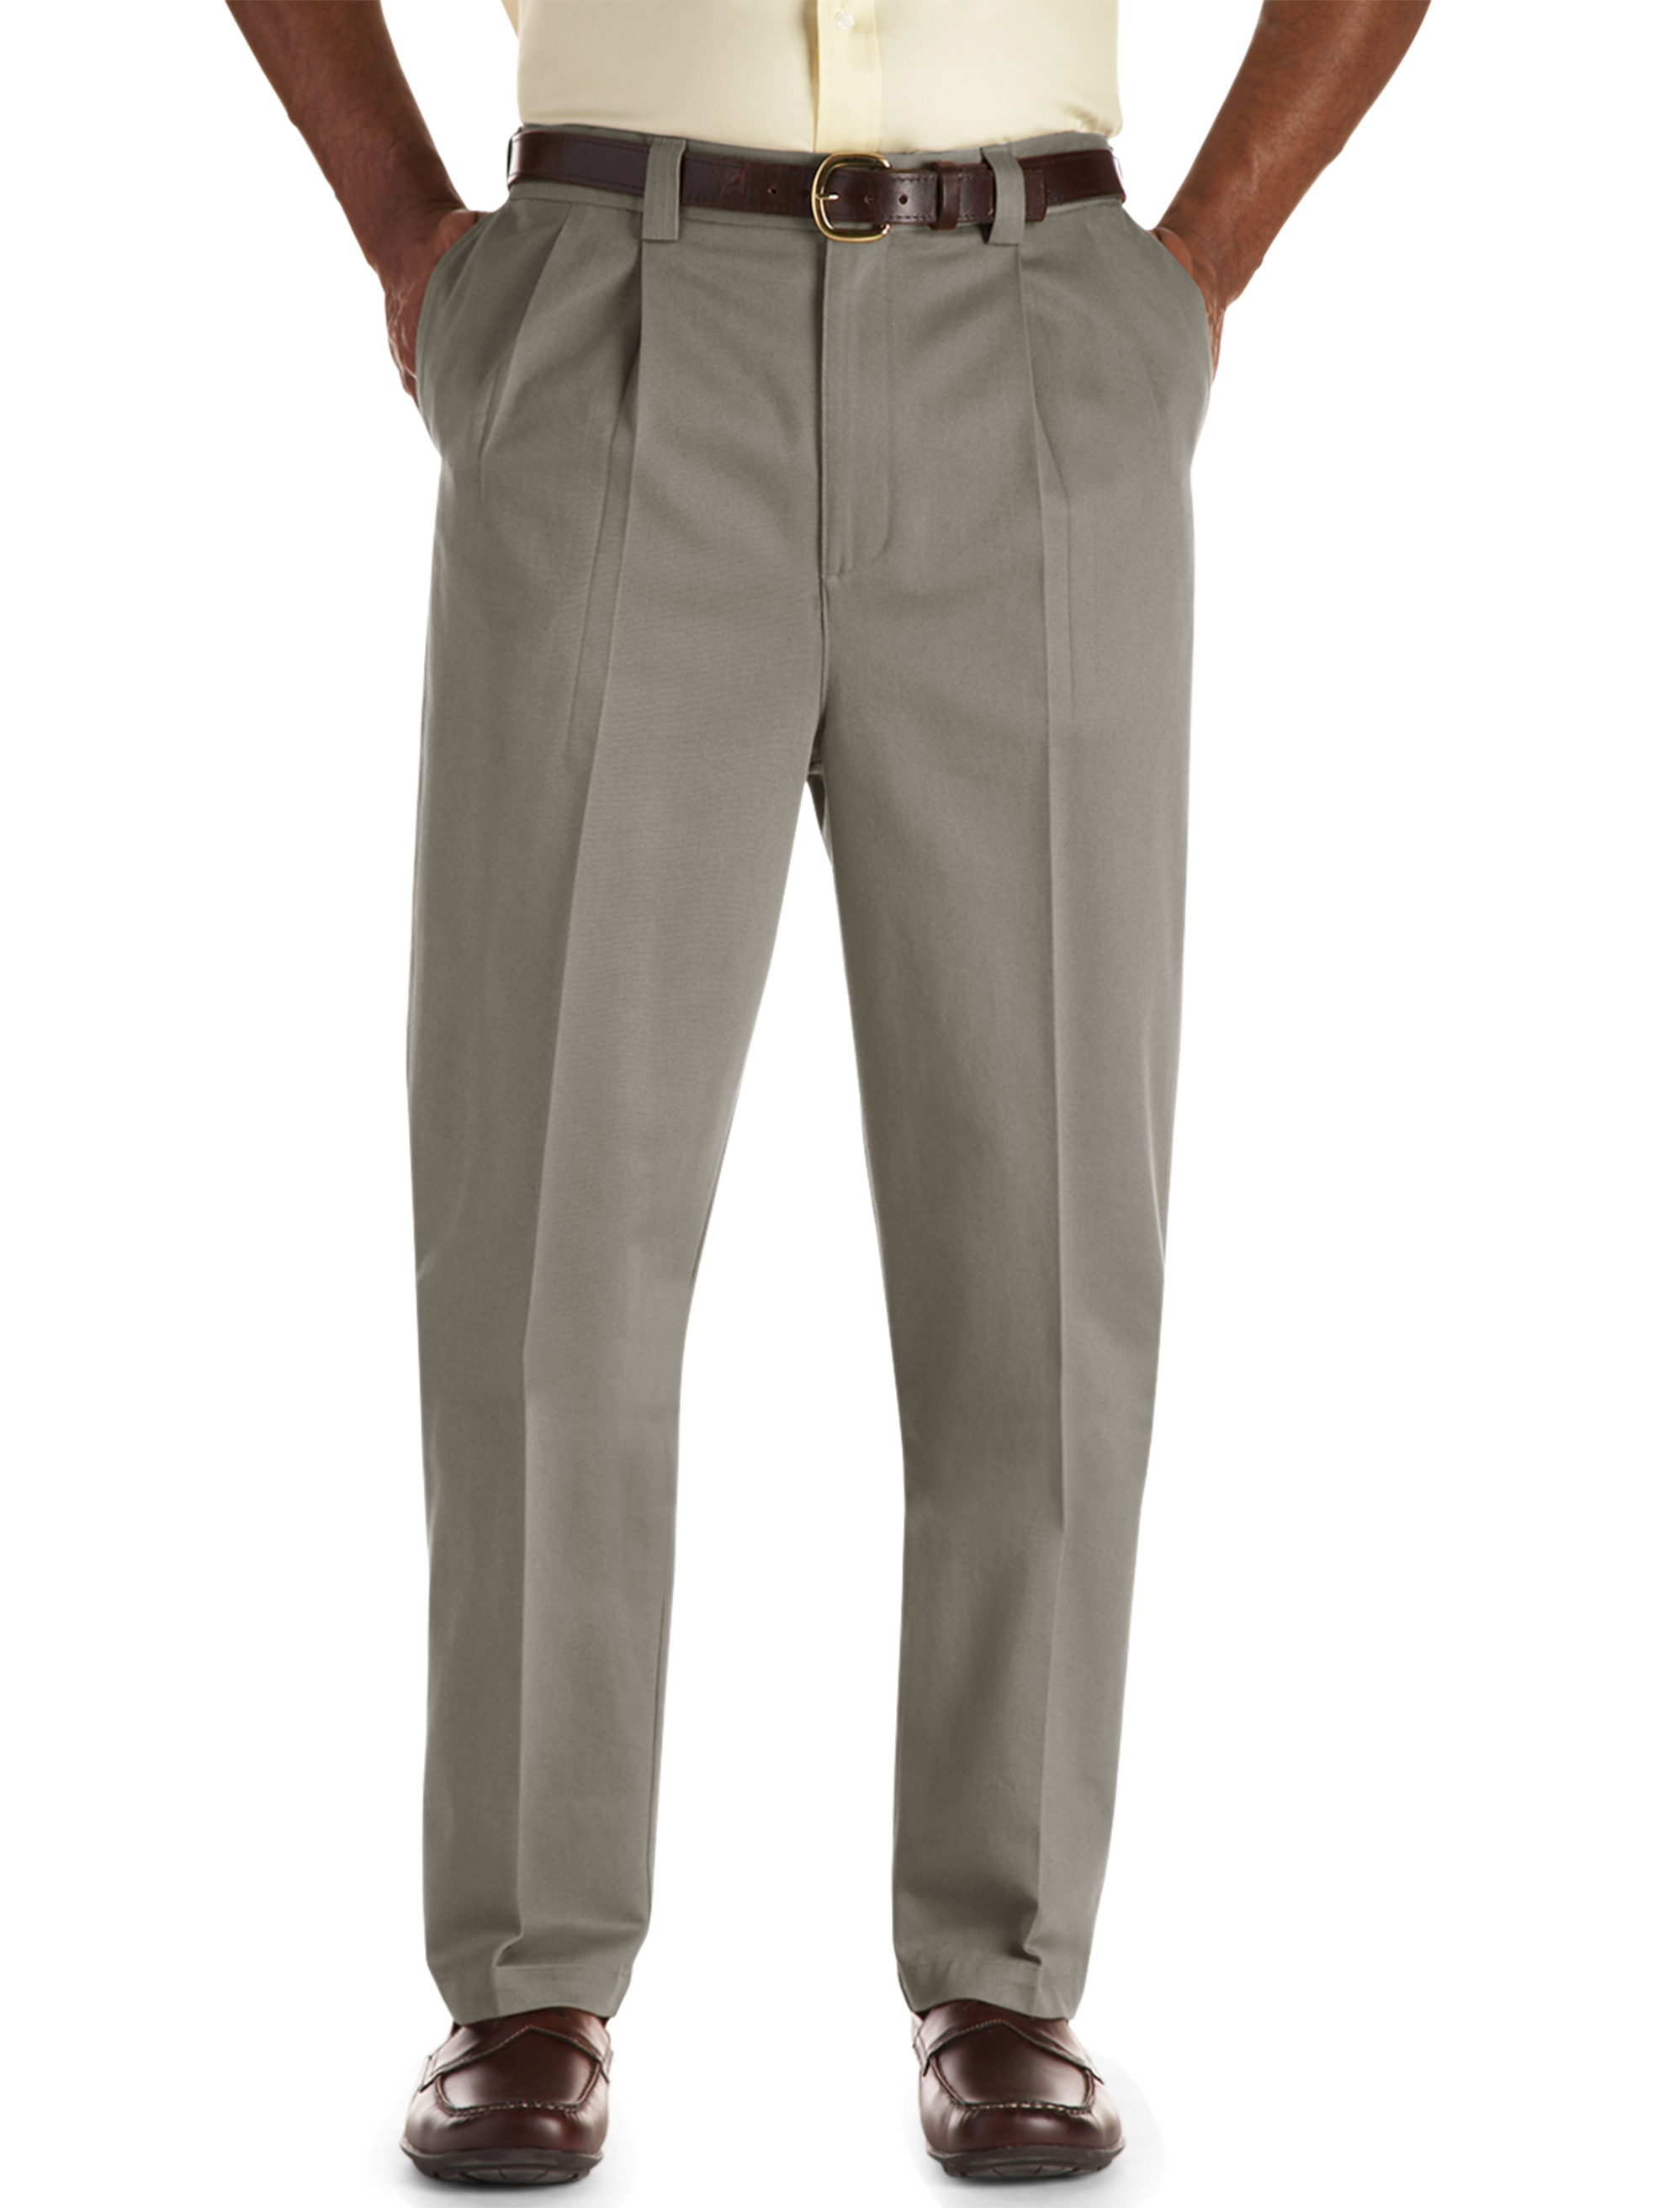 Oak Hill Waist-Relaxer Pleated Premium Pants Casual Male XL